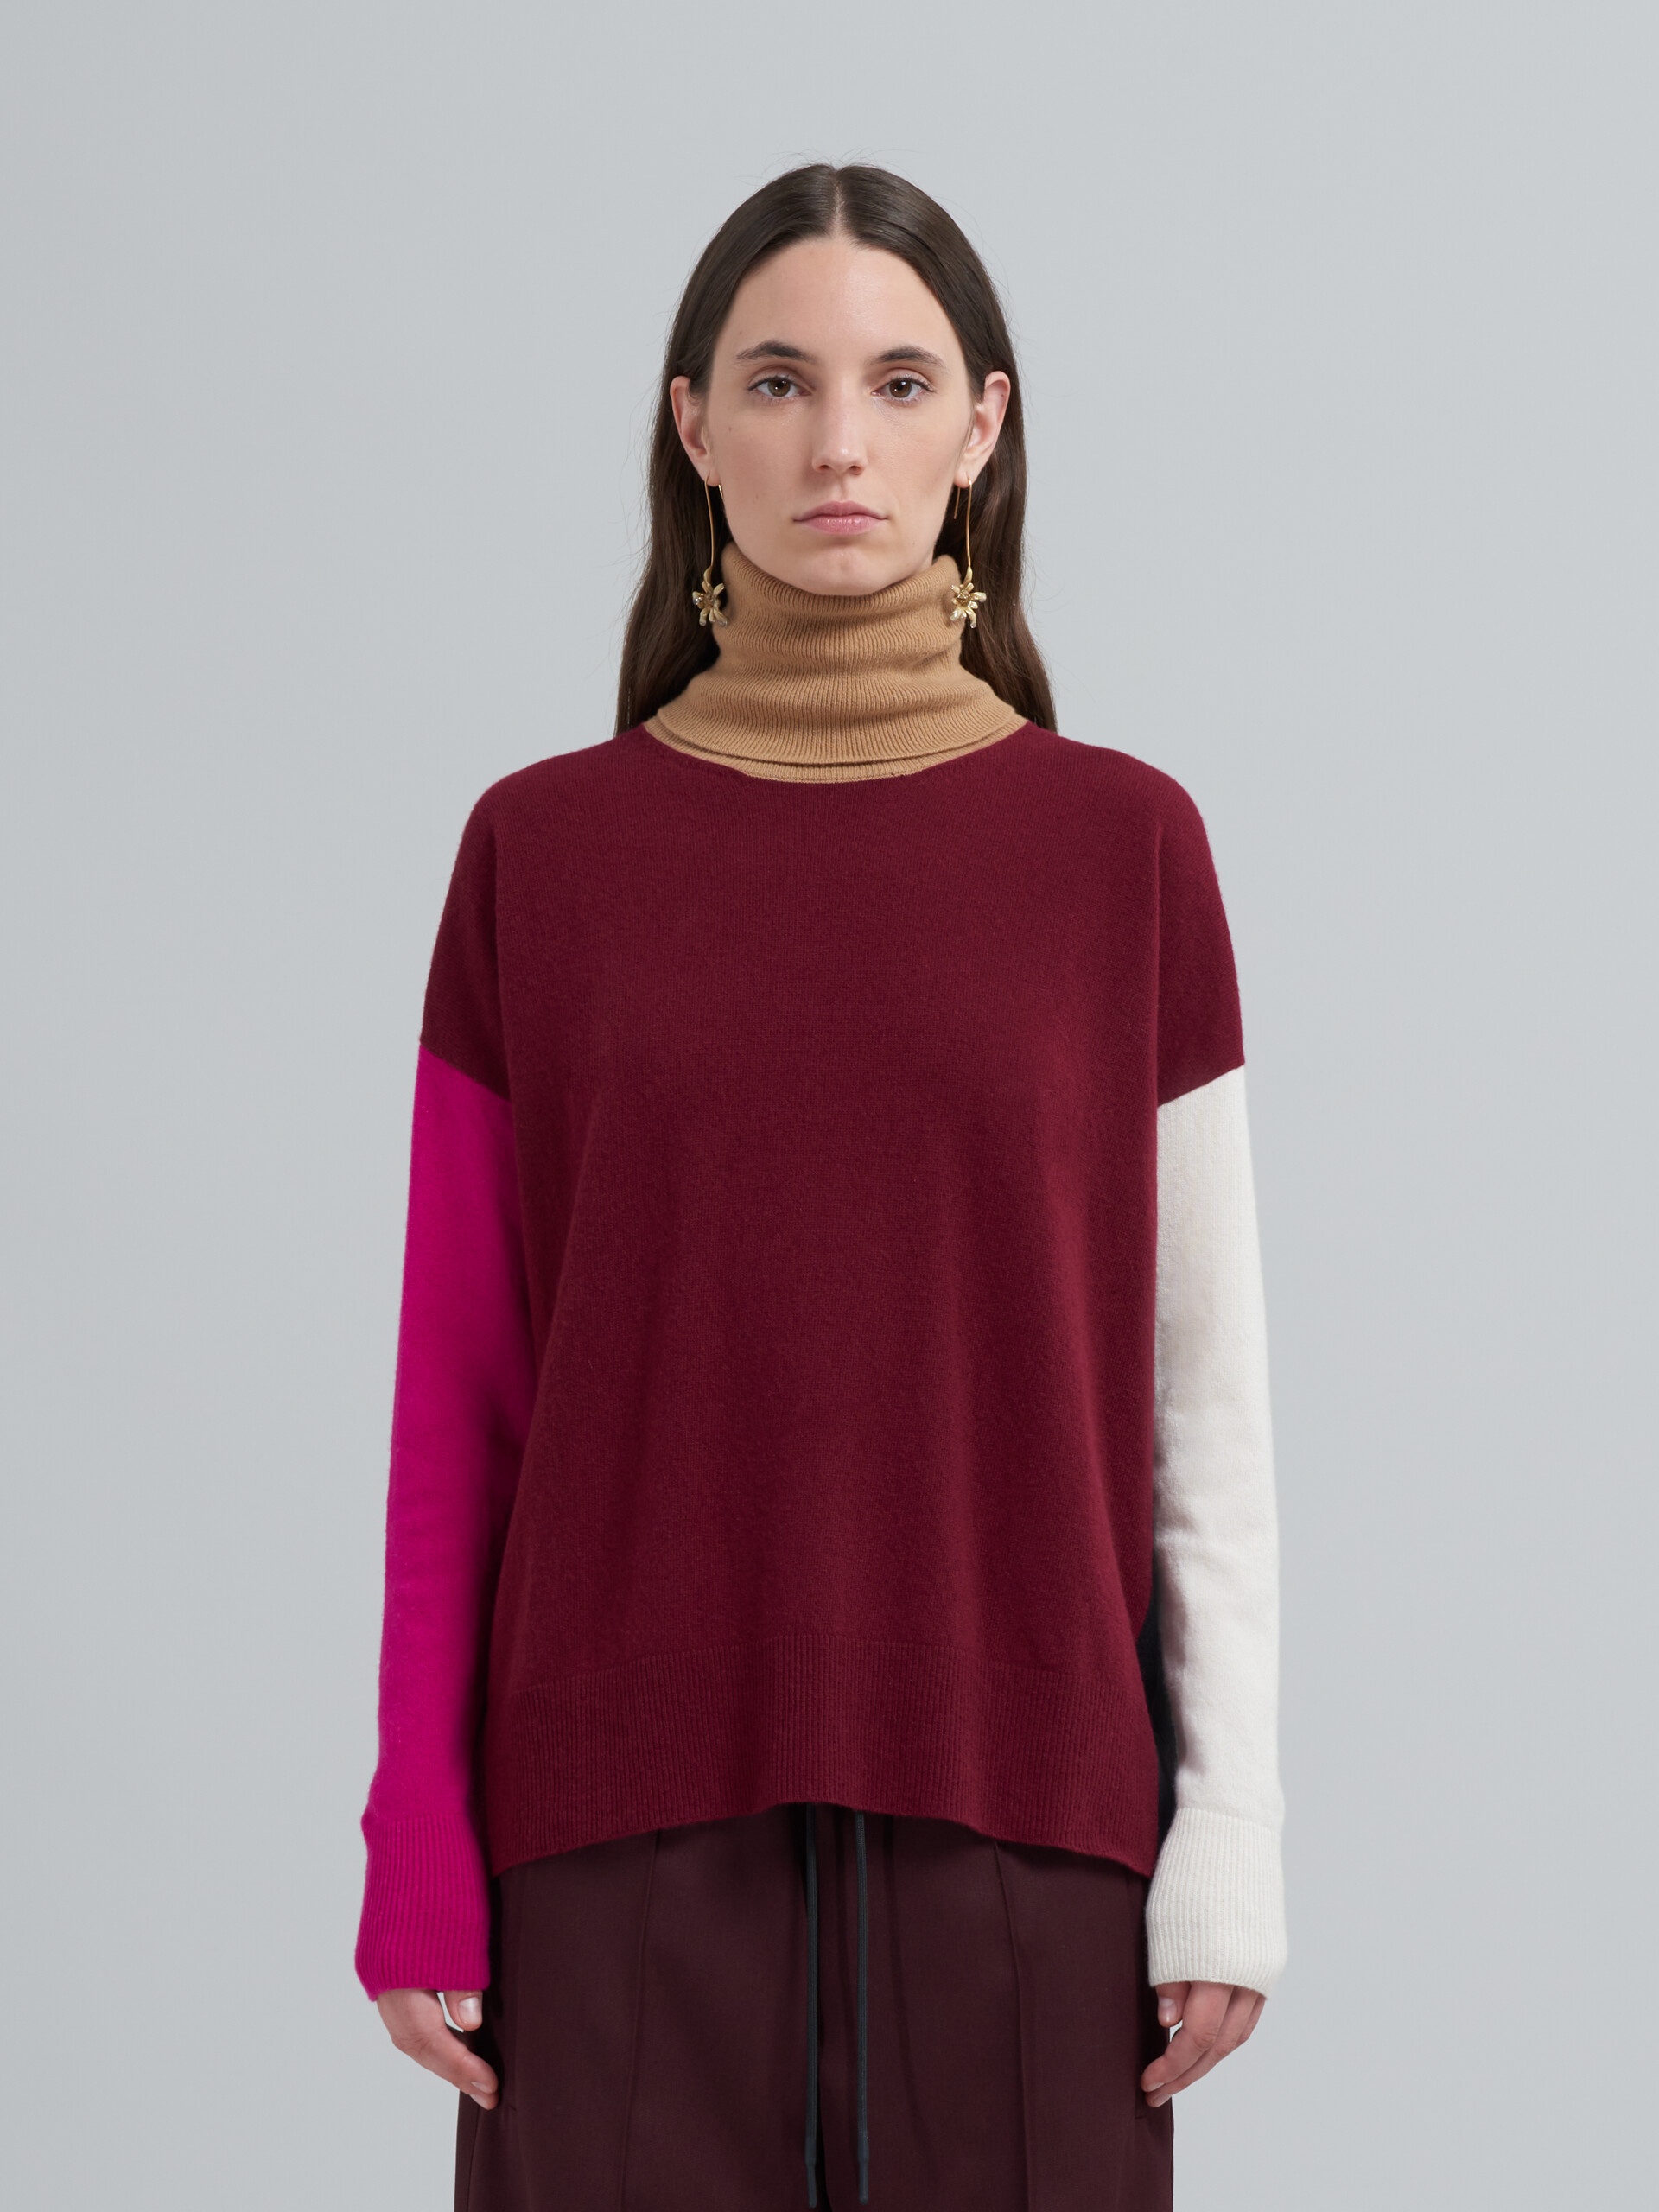 Cashwool turtleneck sweater - Pullovers - Image 2